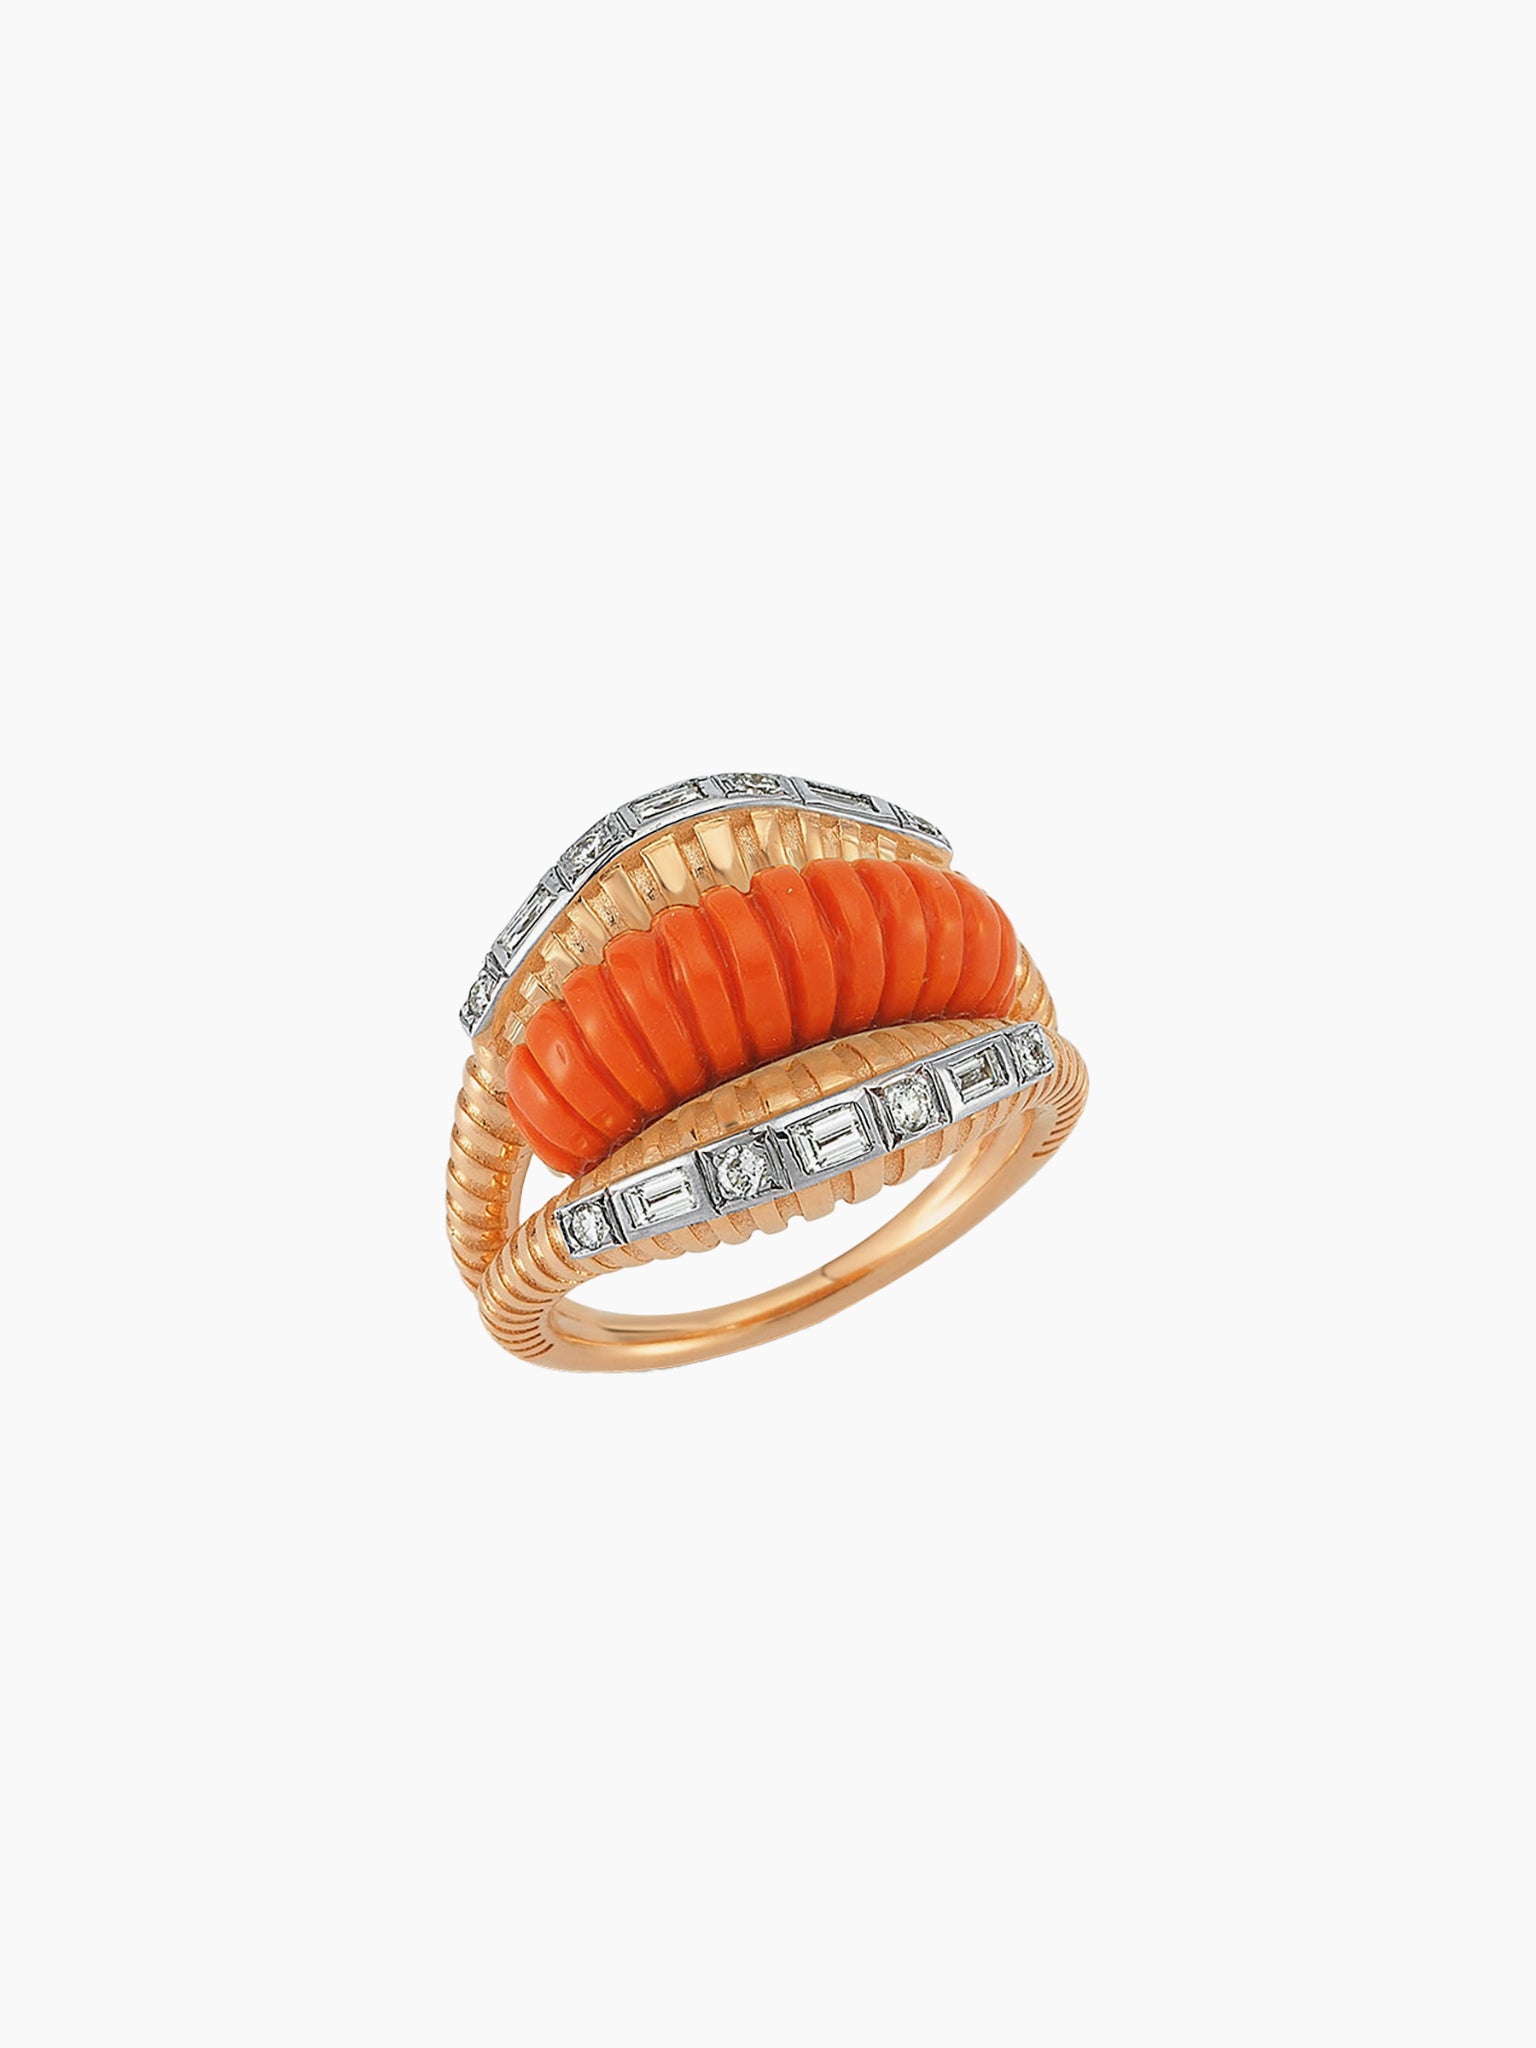 MELIS GORAL Vibe Diamond Ring